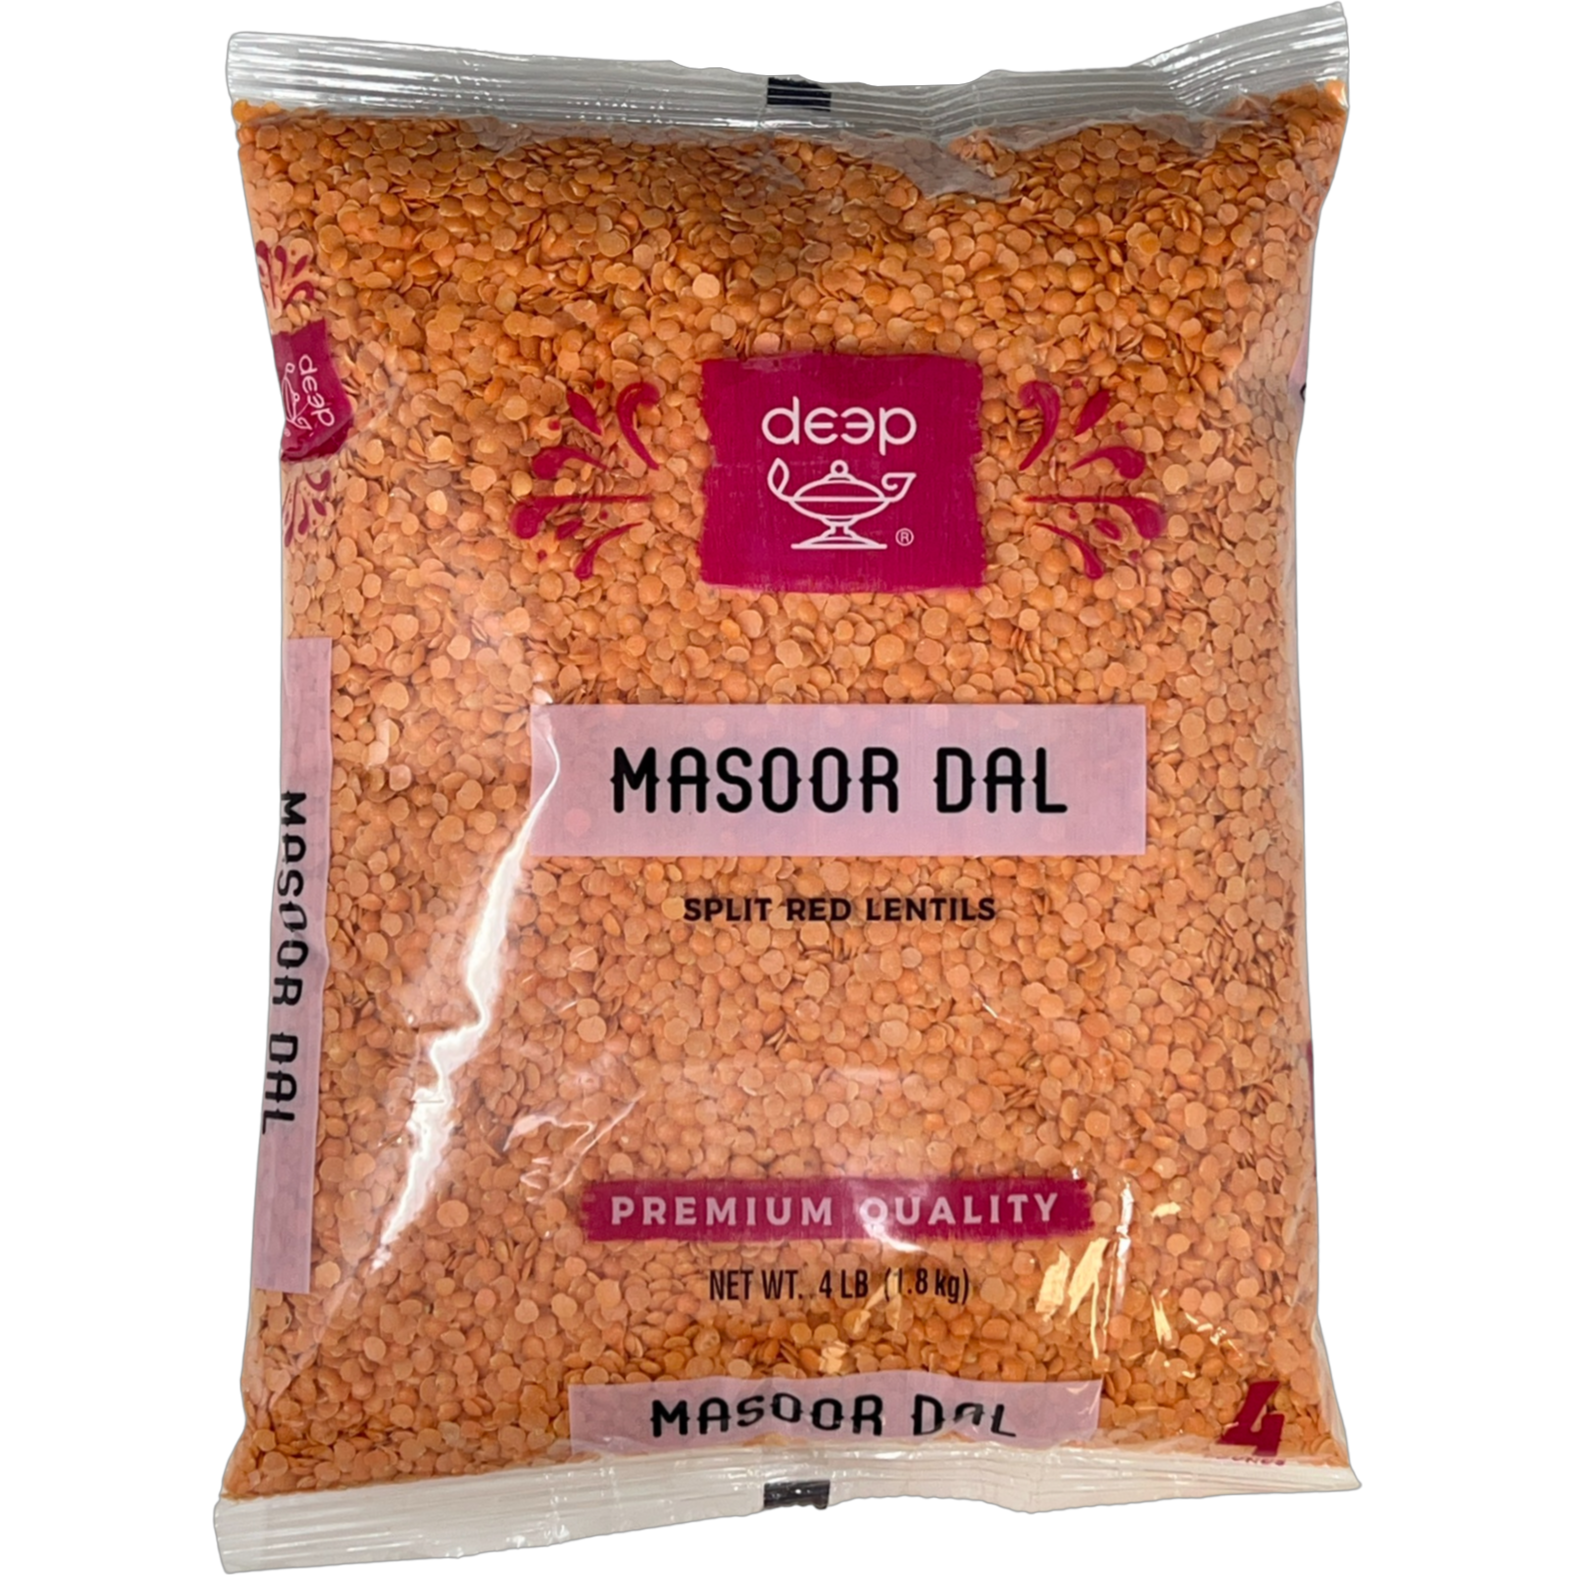 Deep Masoor Dal Split Red Lentils - 4 Lb (1.8 Kg)